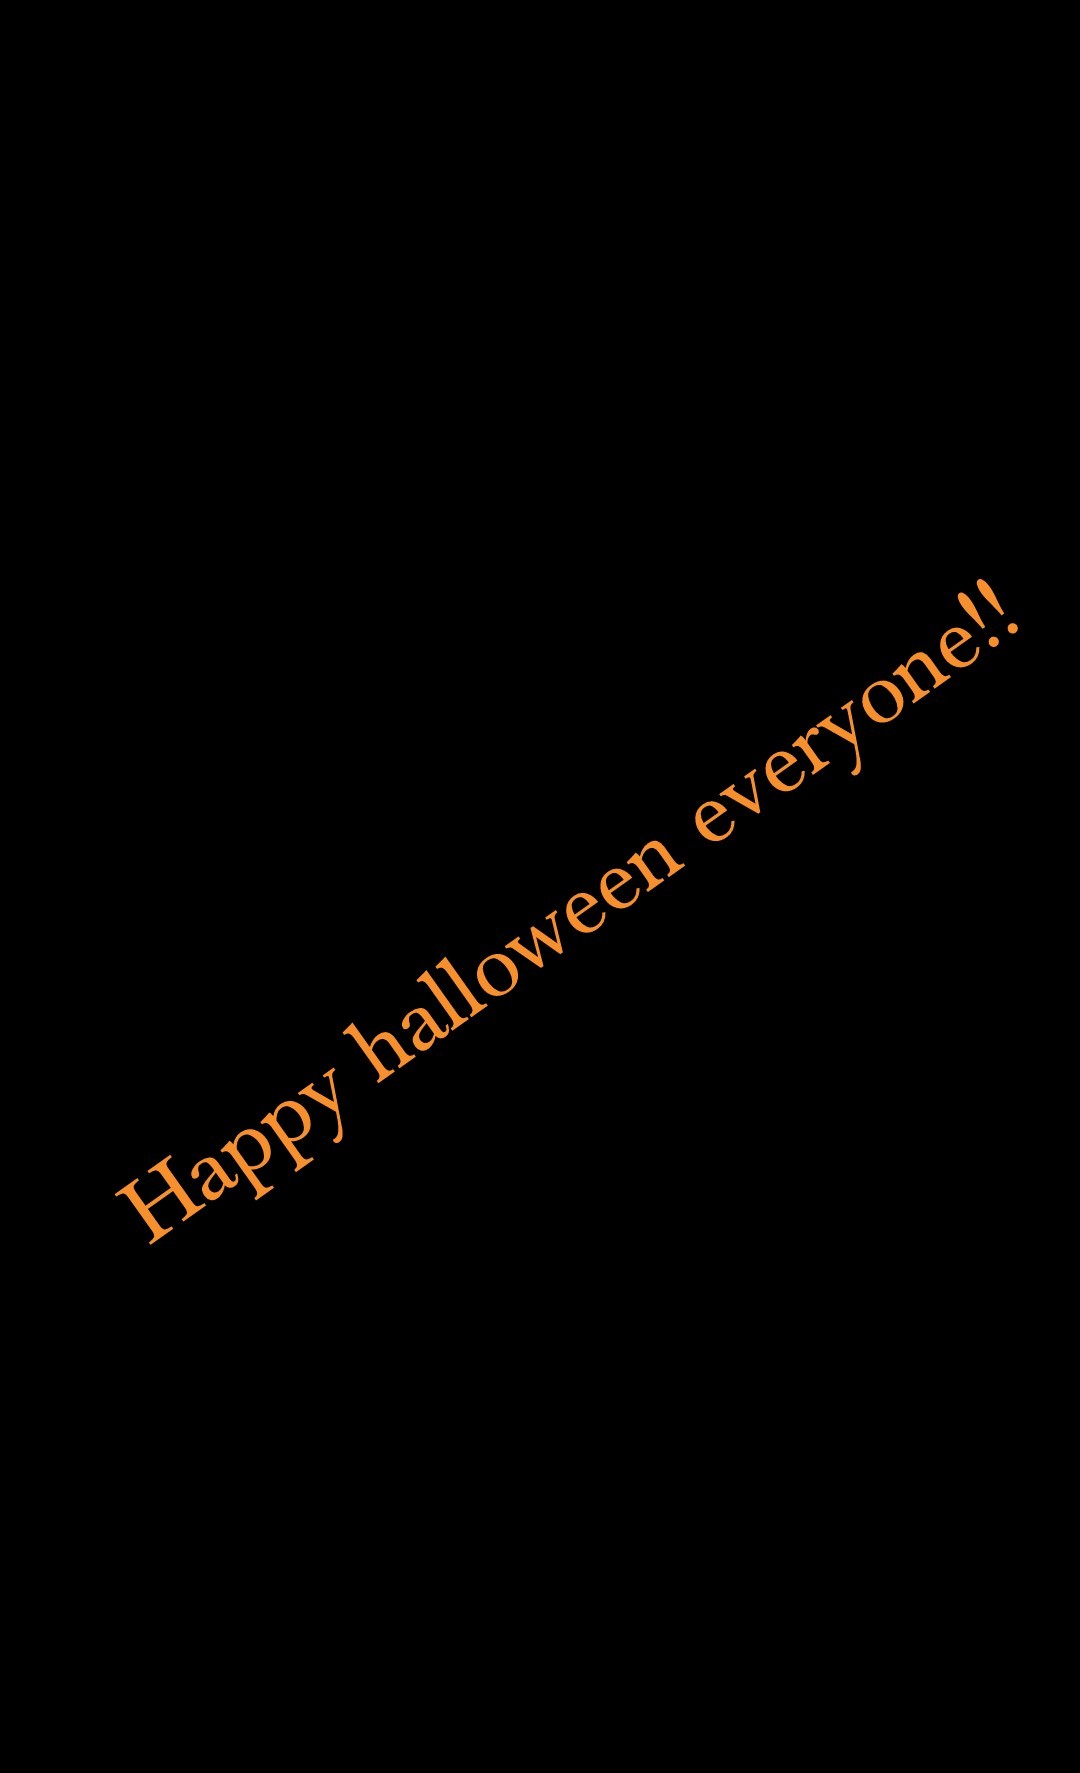 Happy halloween everyone!!